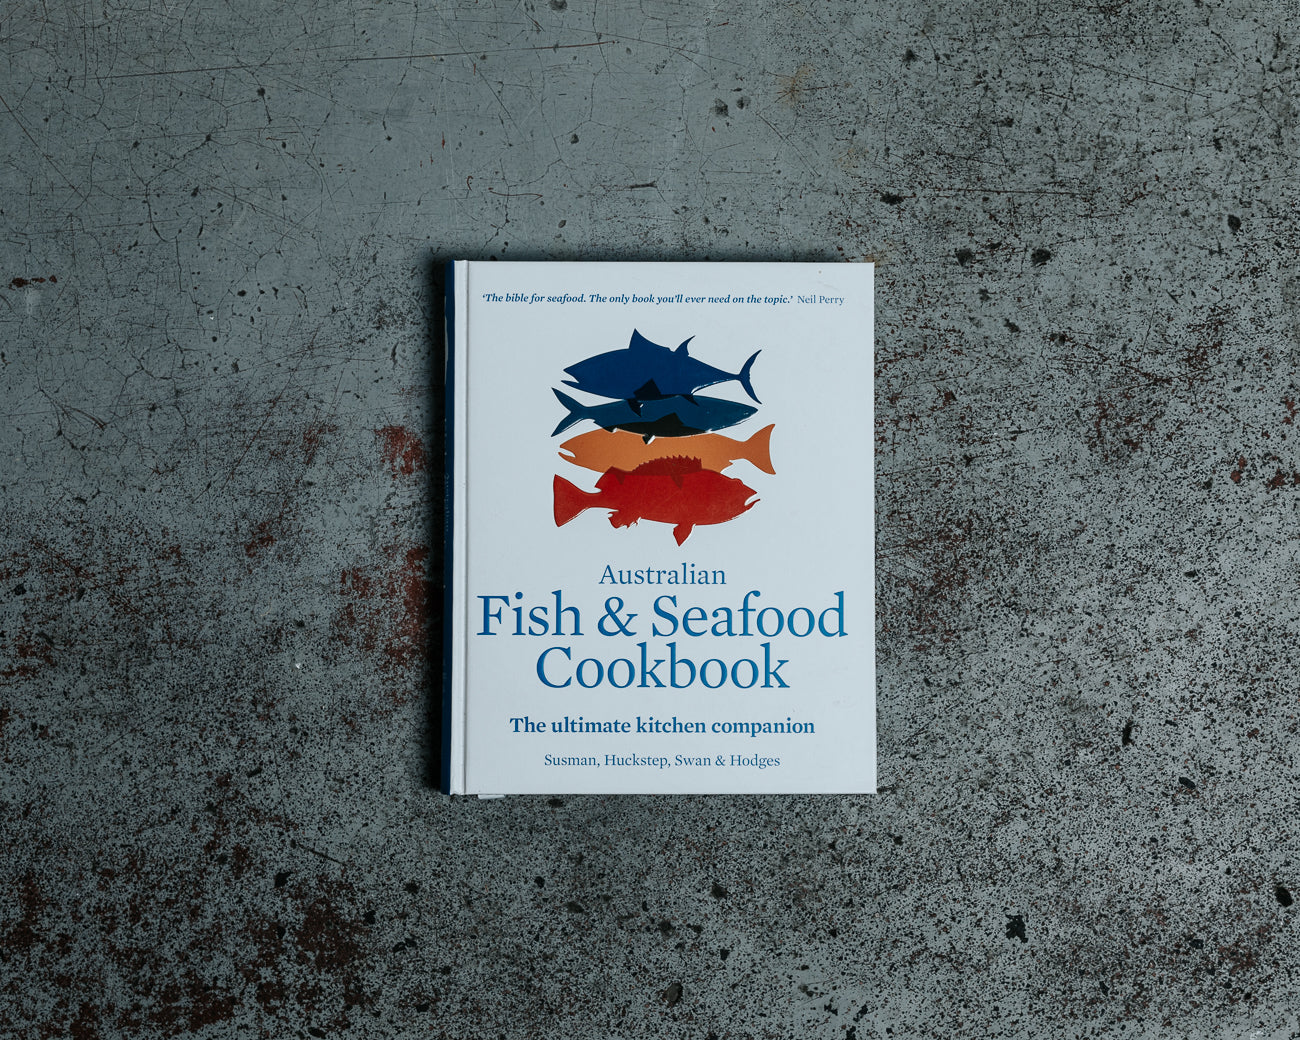 Australian Fish and Seafood Cookbook